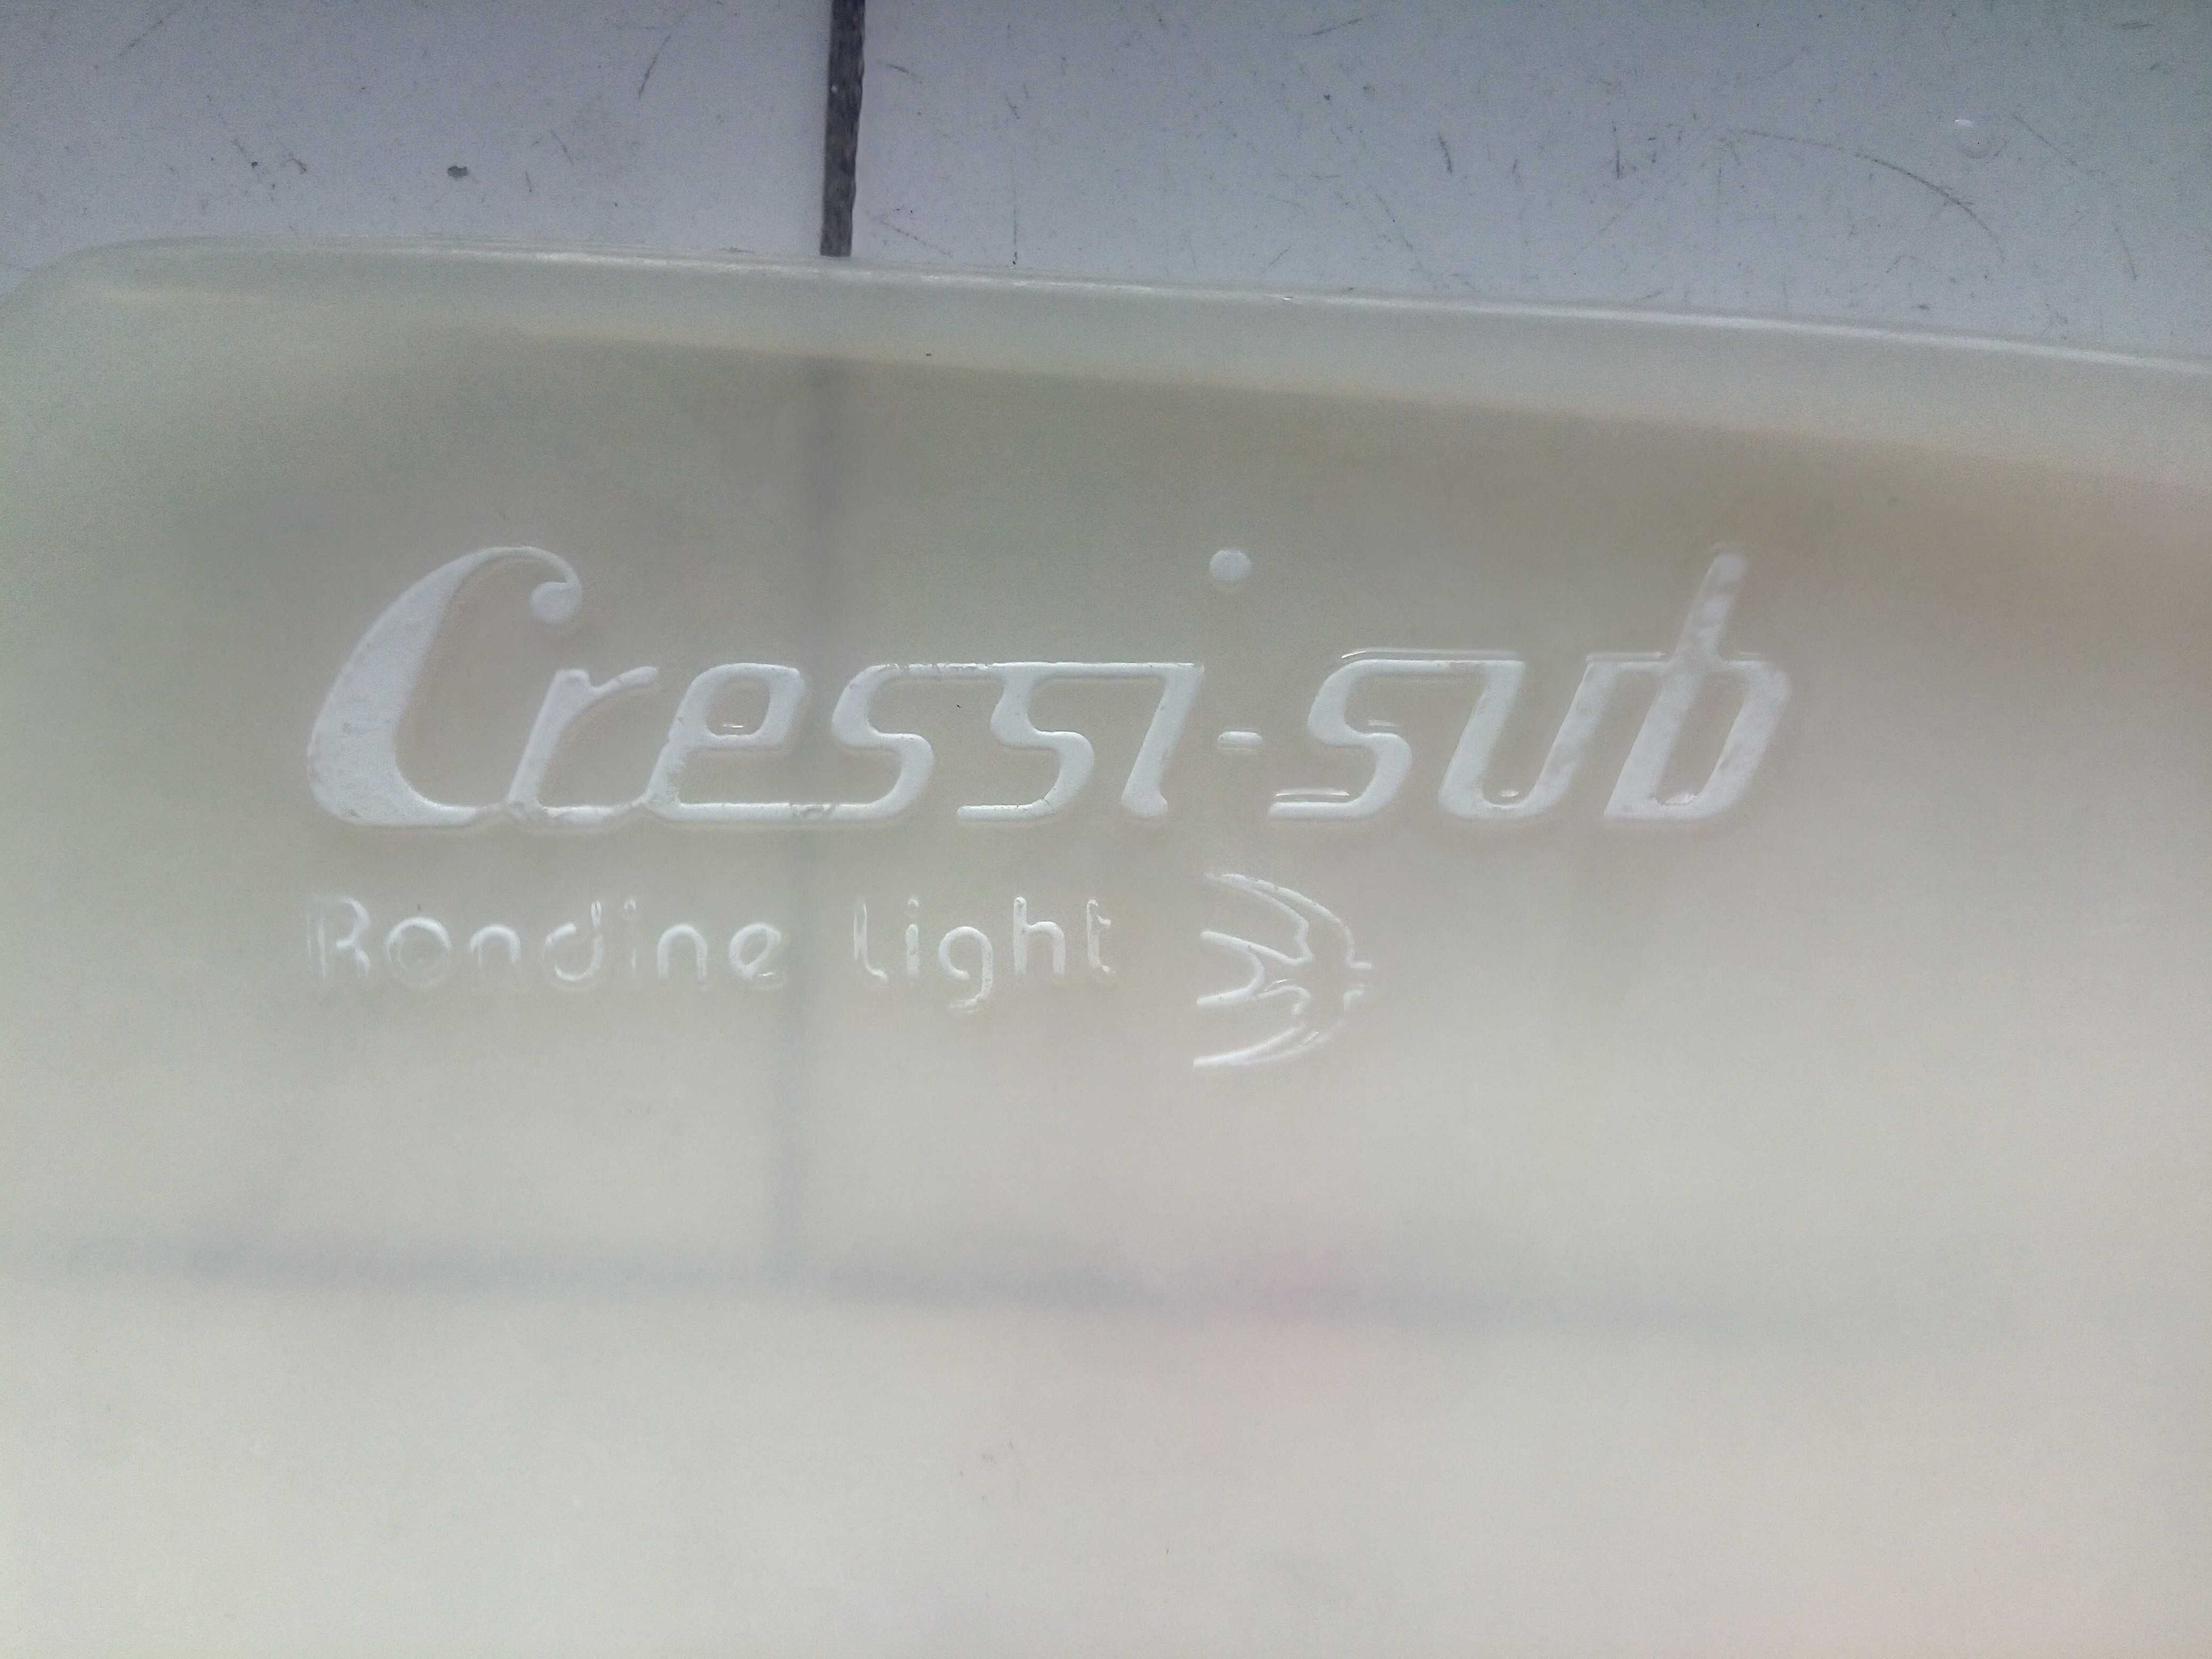 Barbatanas Cressi-sub Rondine Light